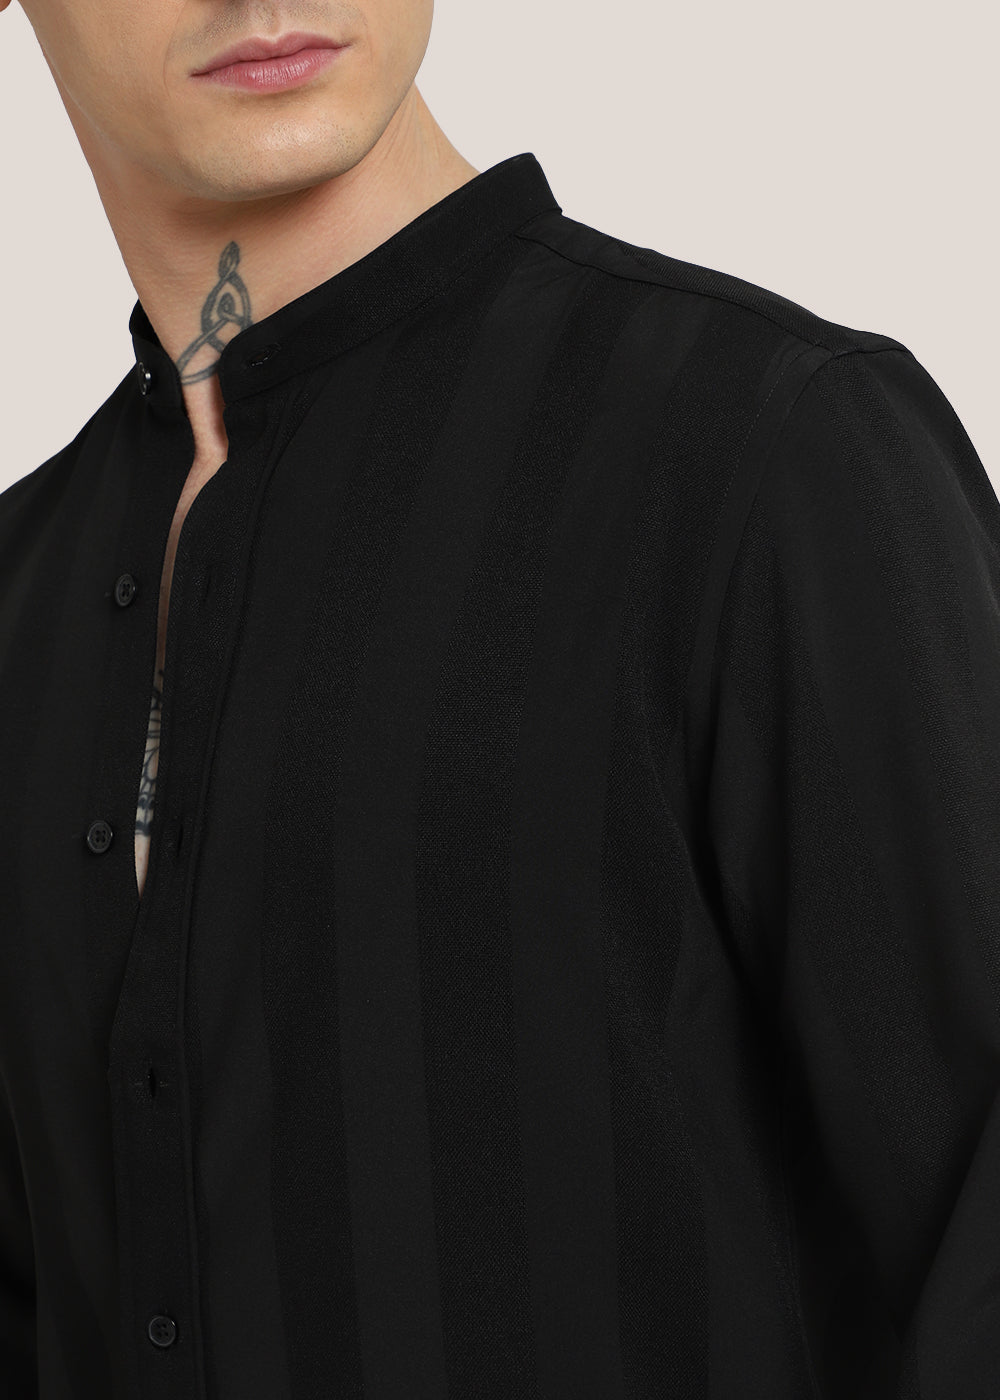 Sable Black Shein Patterned Shirt